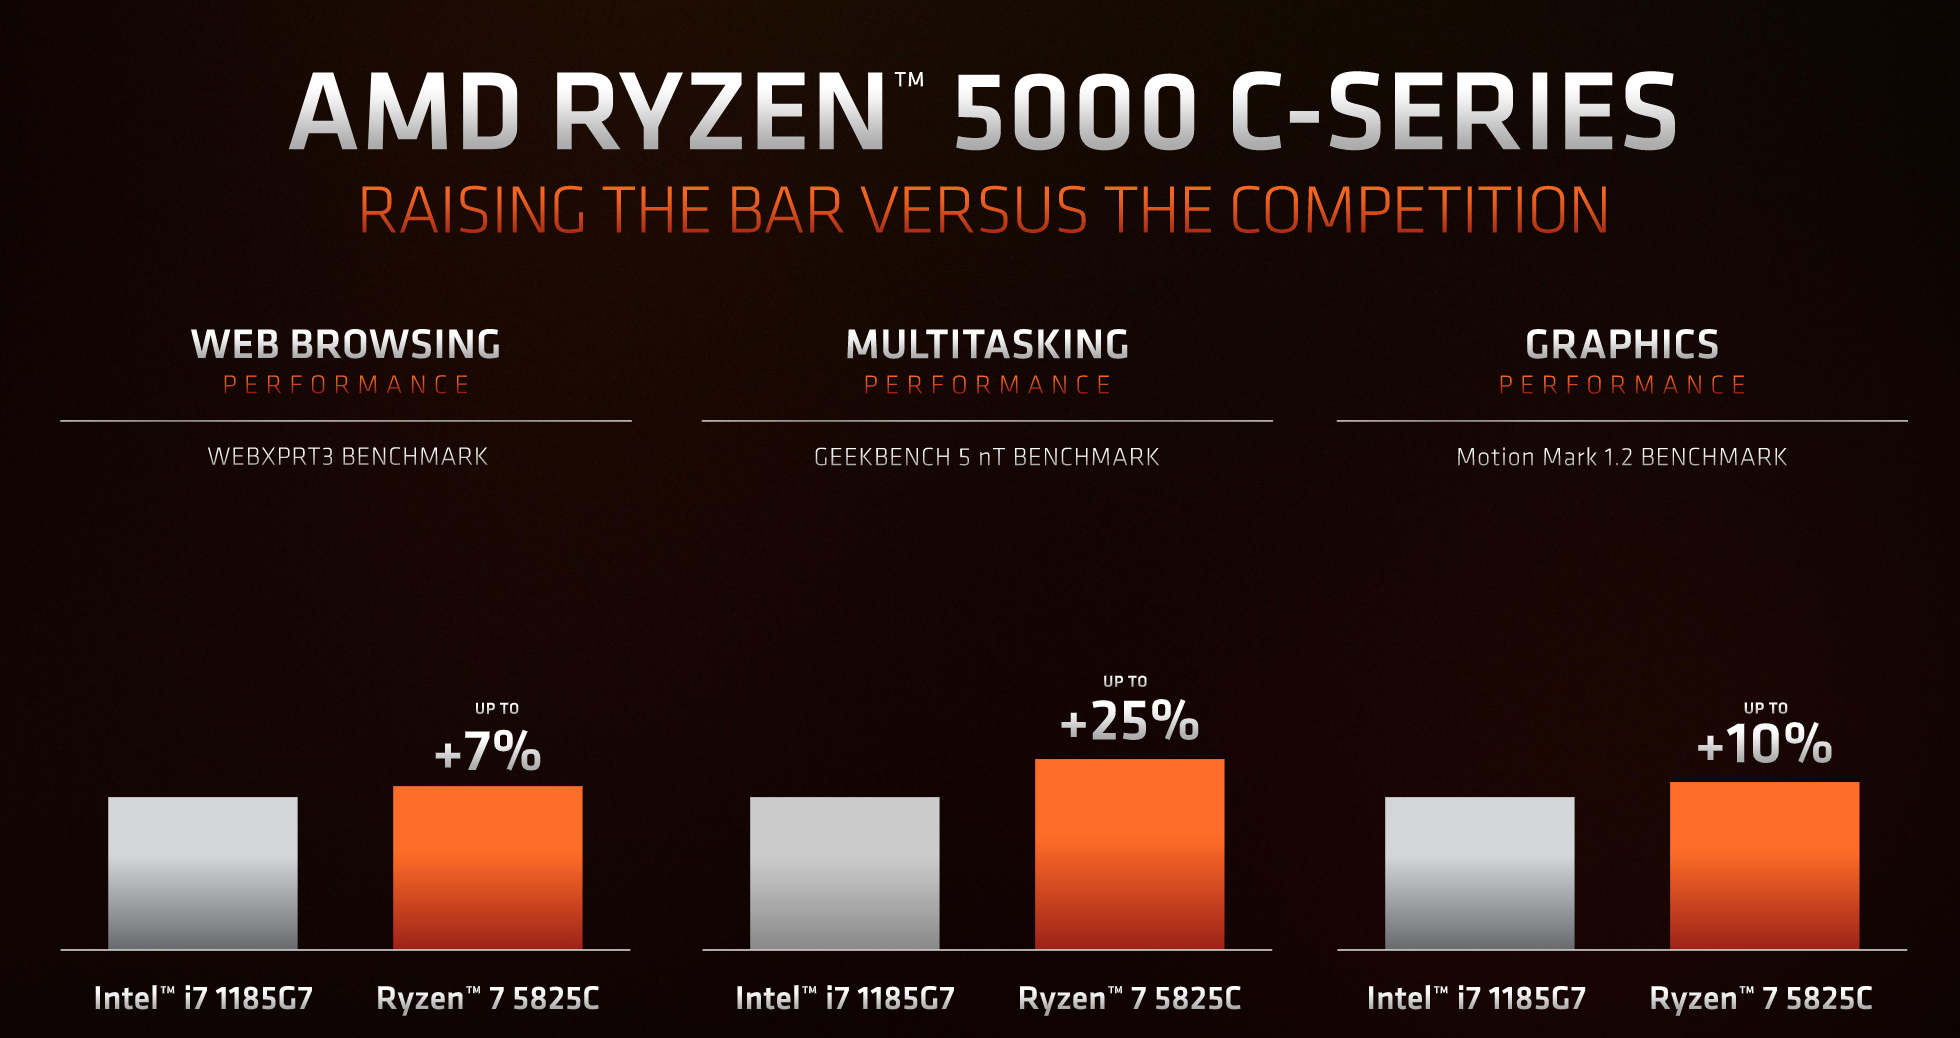 Image: AMD Ryzen 5000 C-series